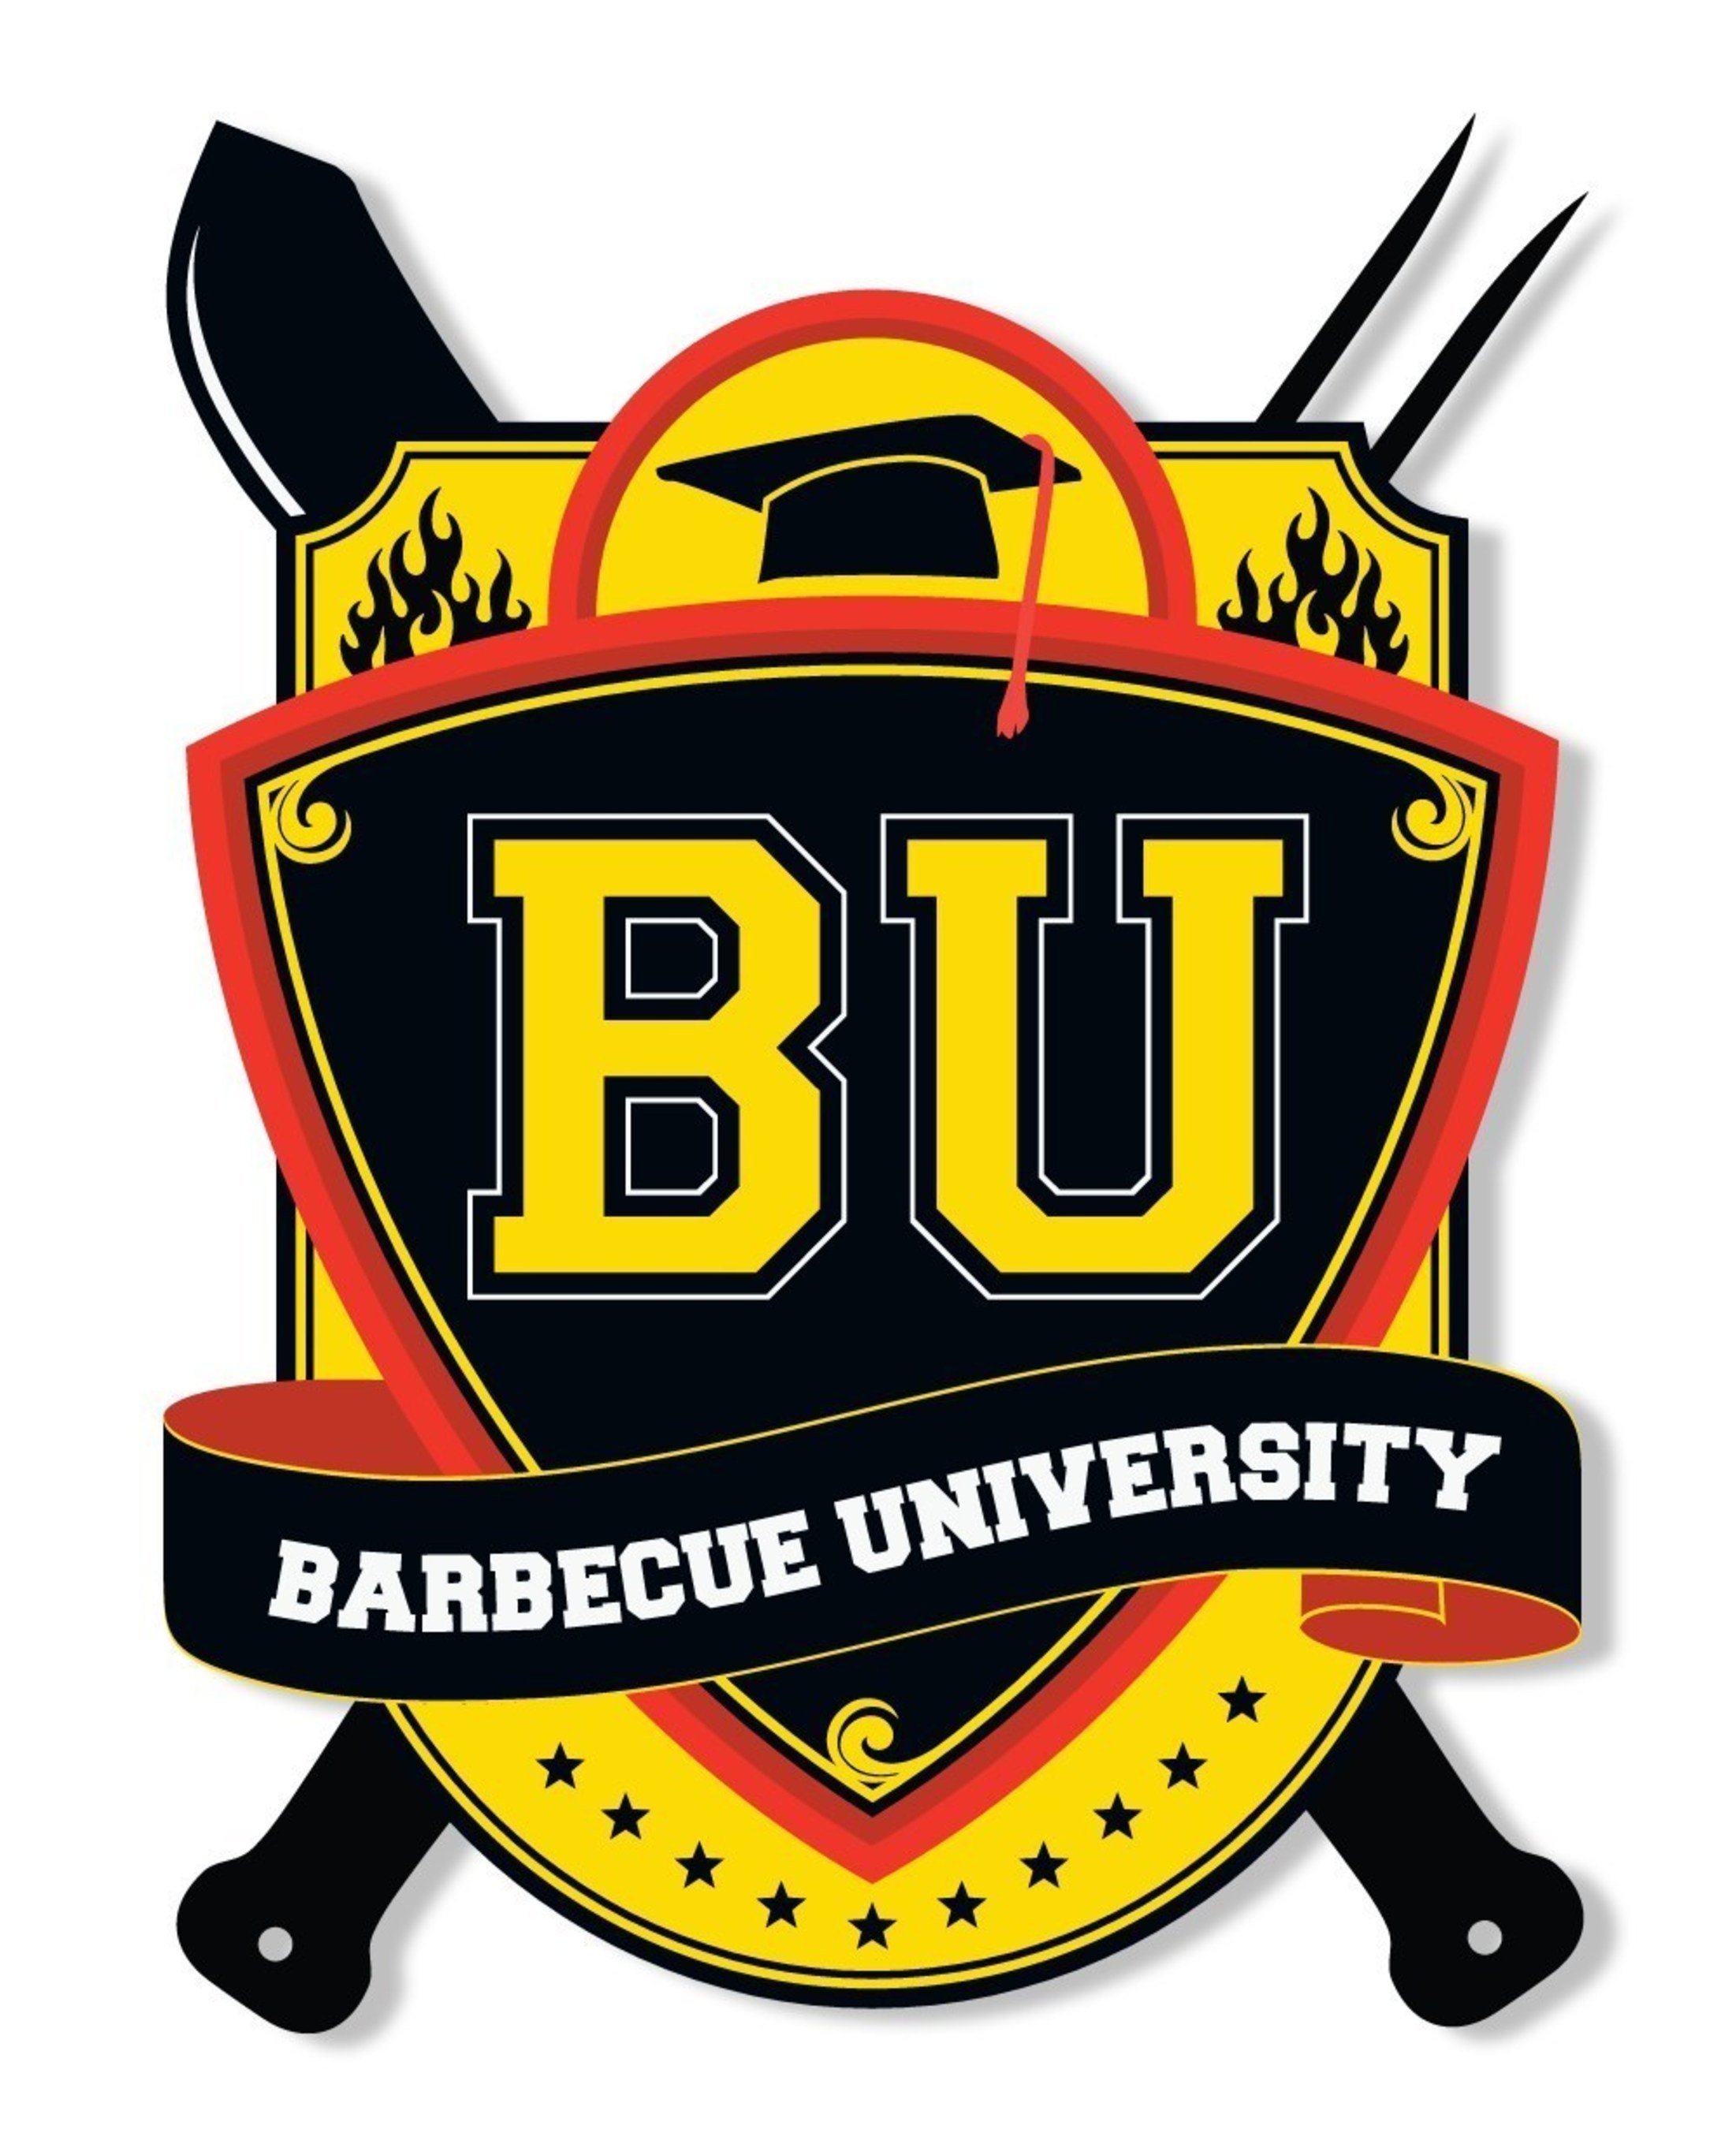 Dickey's Barbecue Restaurants, Inc. celebrates the last Barbecue University class of 2015.